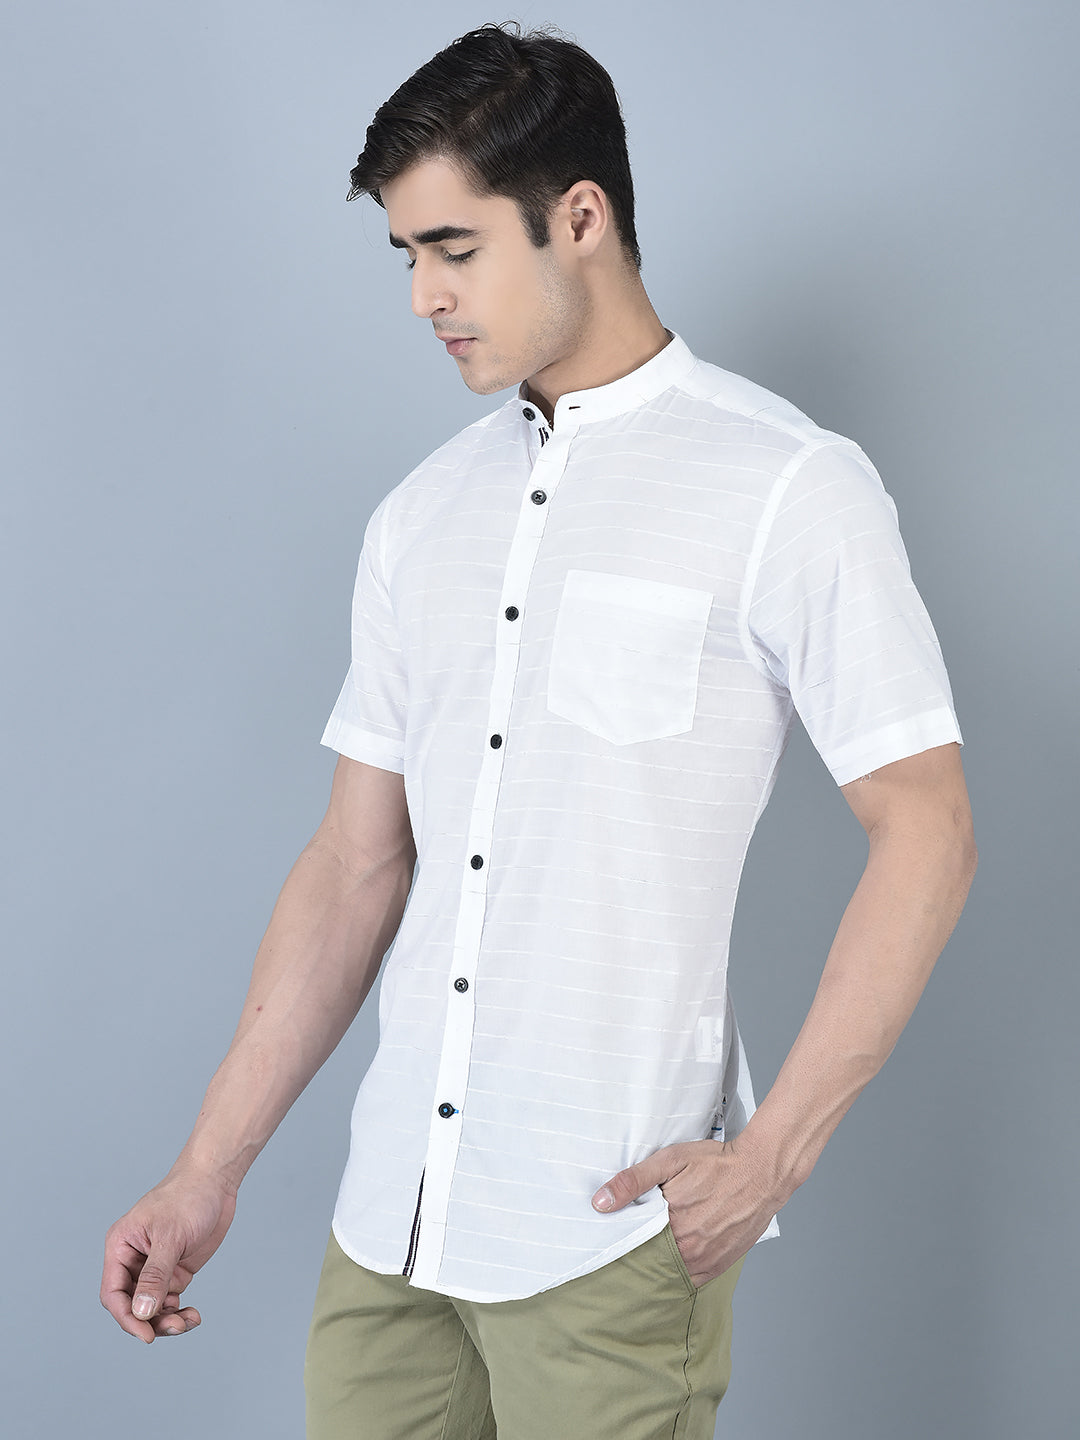 CANOE MEN Casual Shirt White Color Cotton Fabric Button Closure Striped